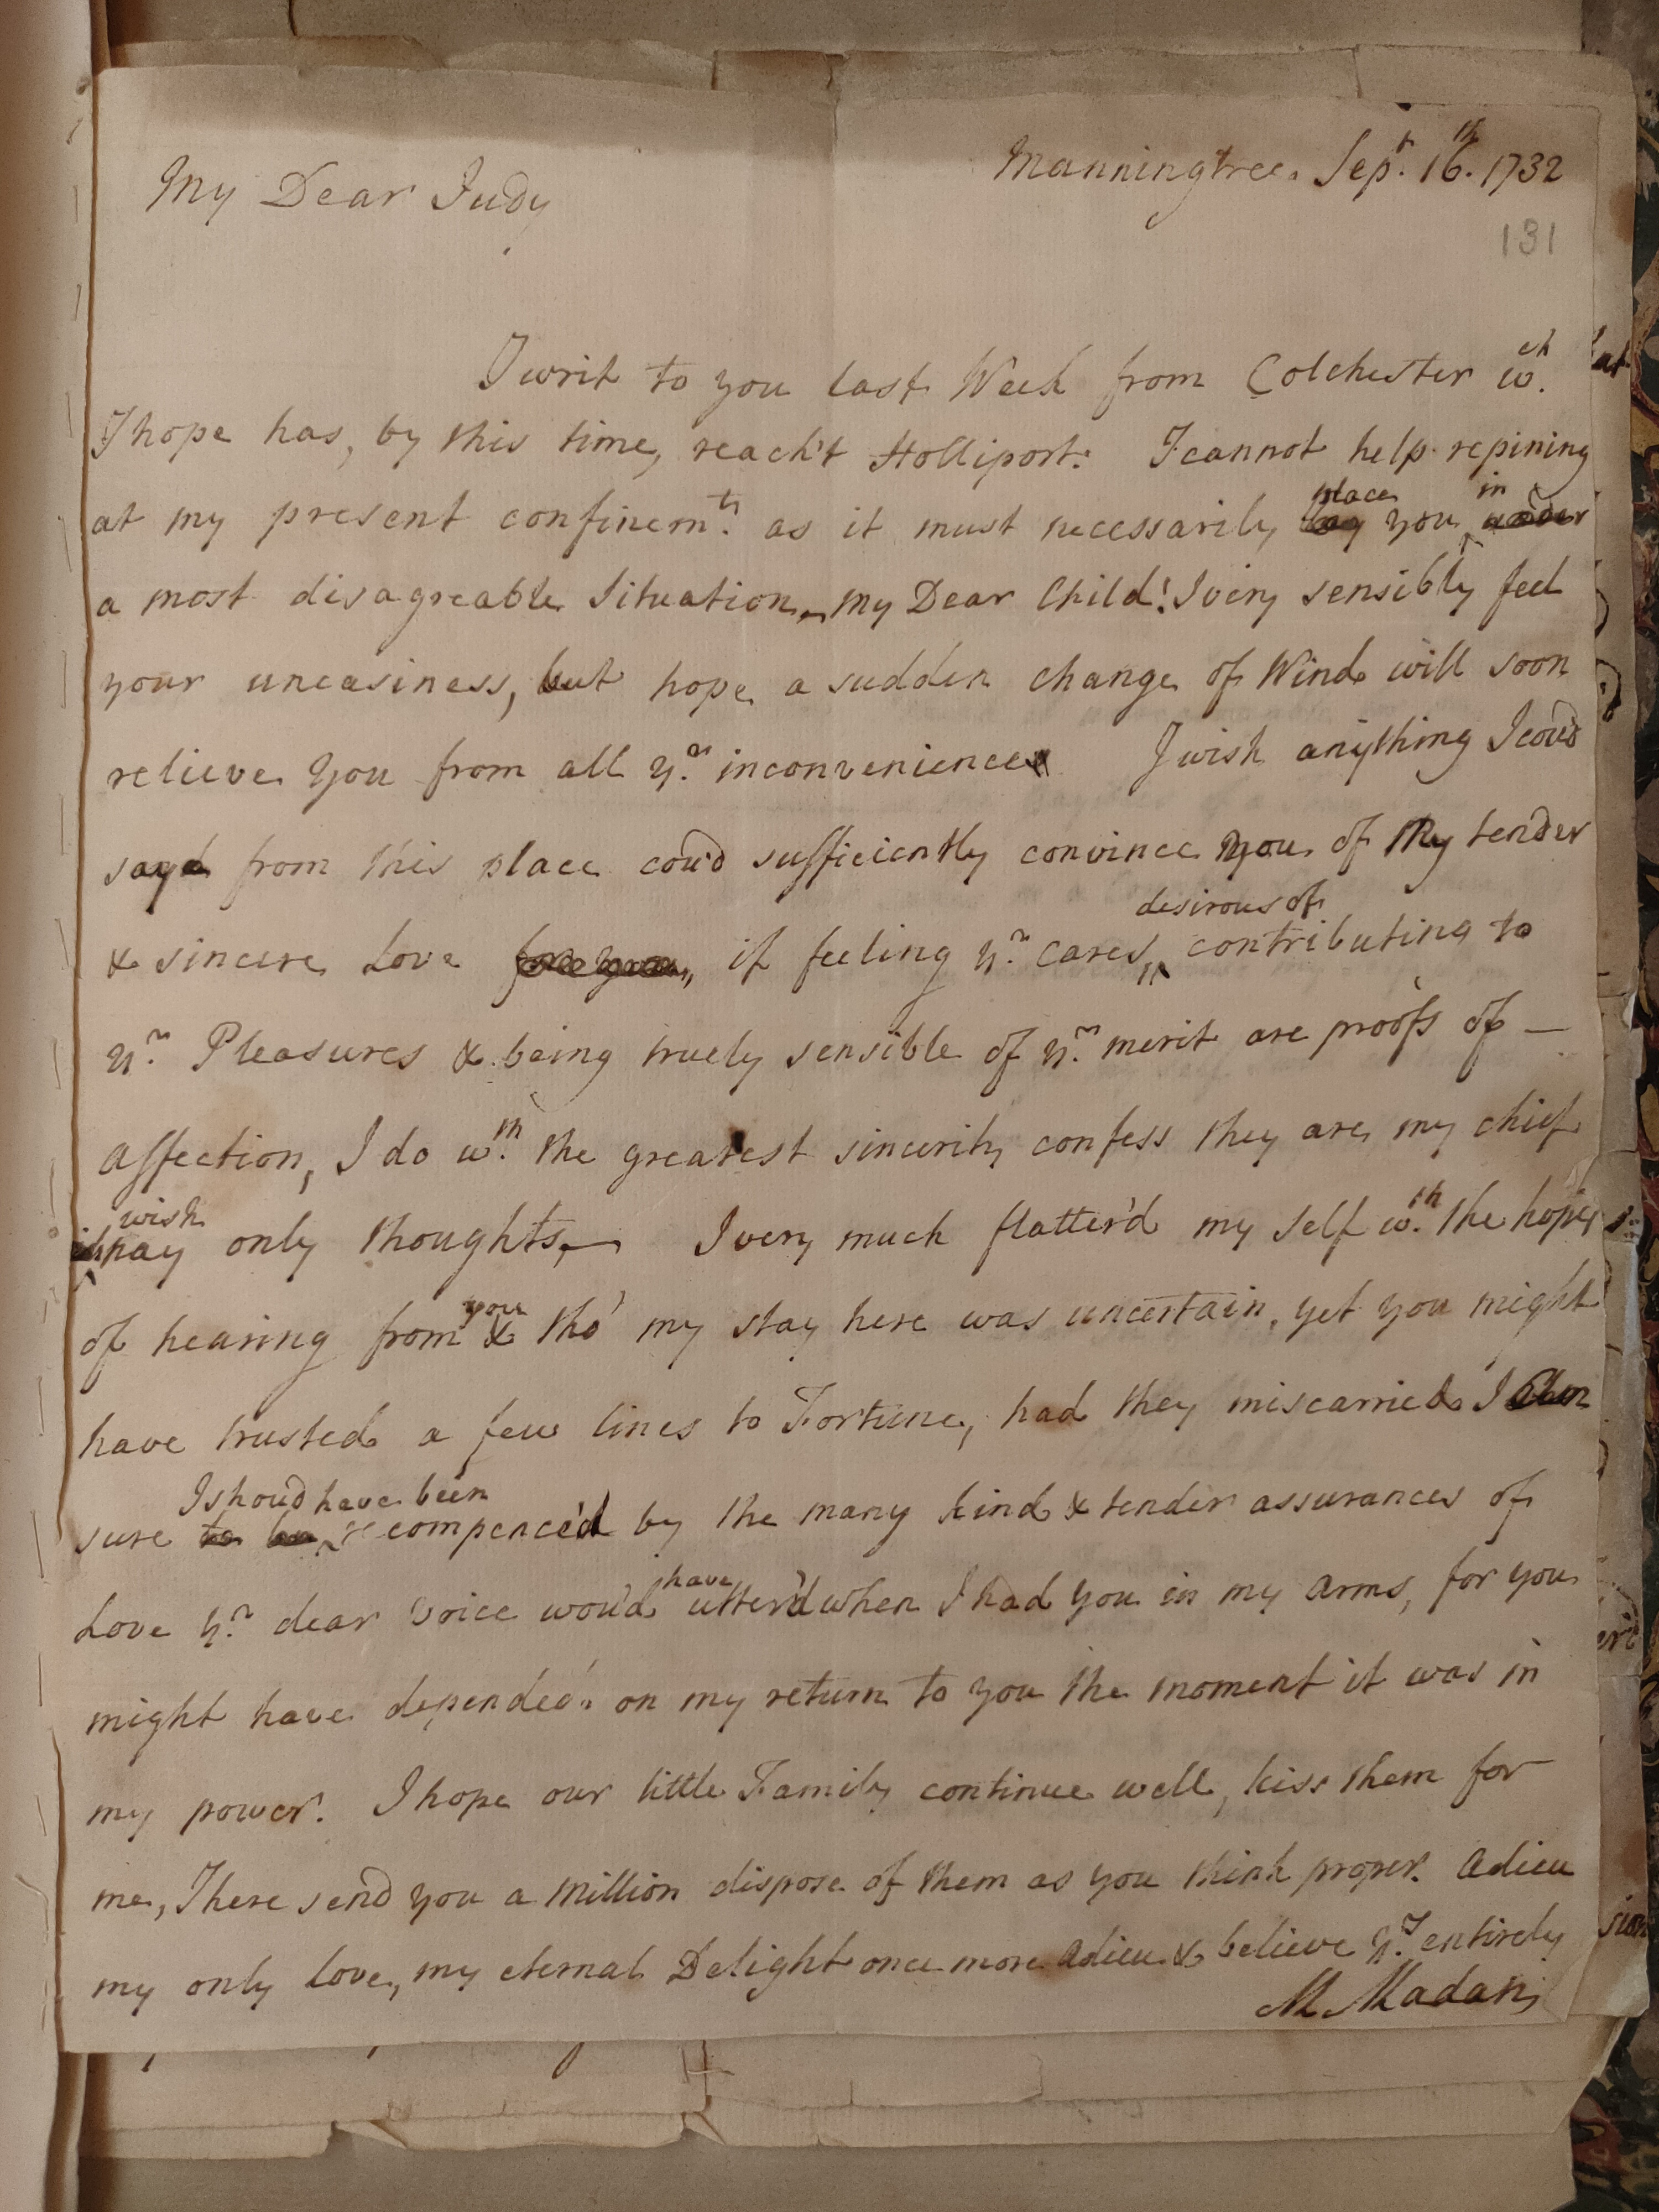 Image #1 of letter: Martin Madan to Judith Madan, 16 September 1732